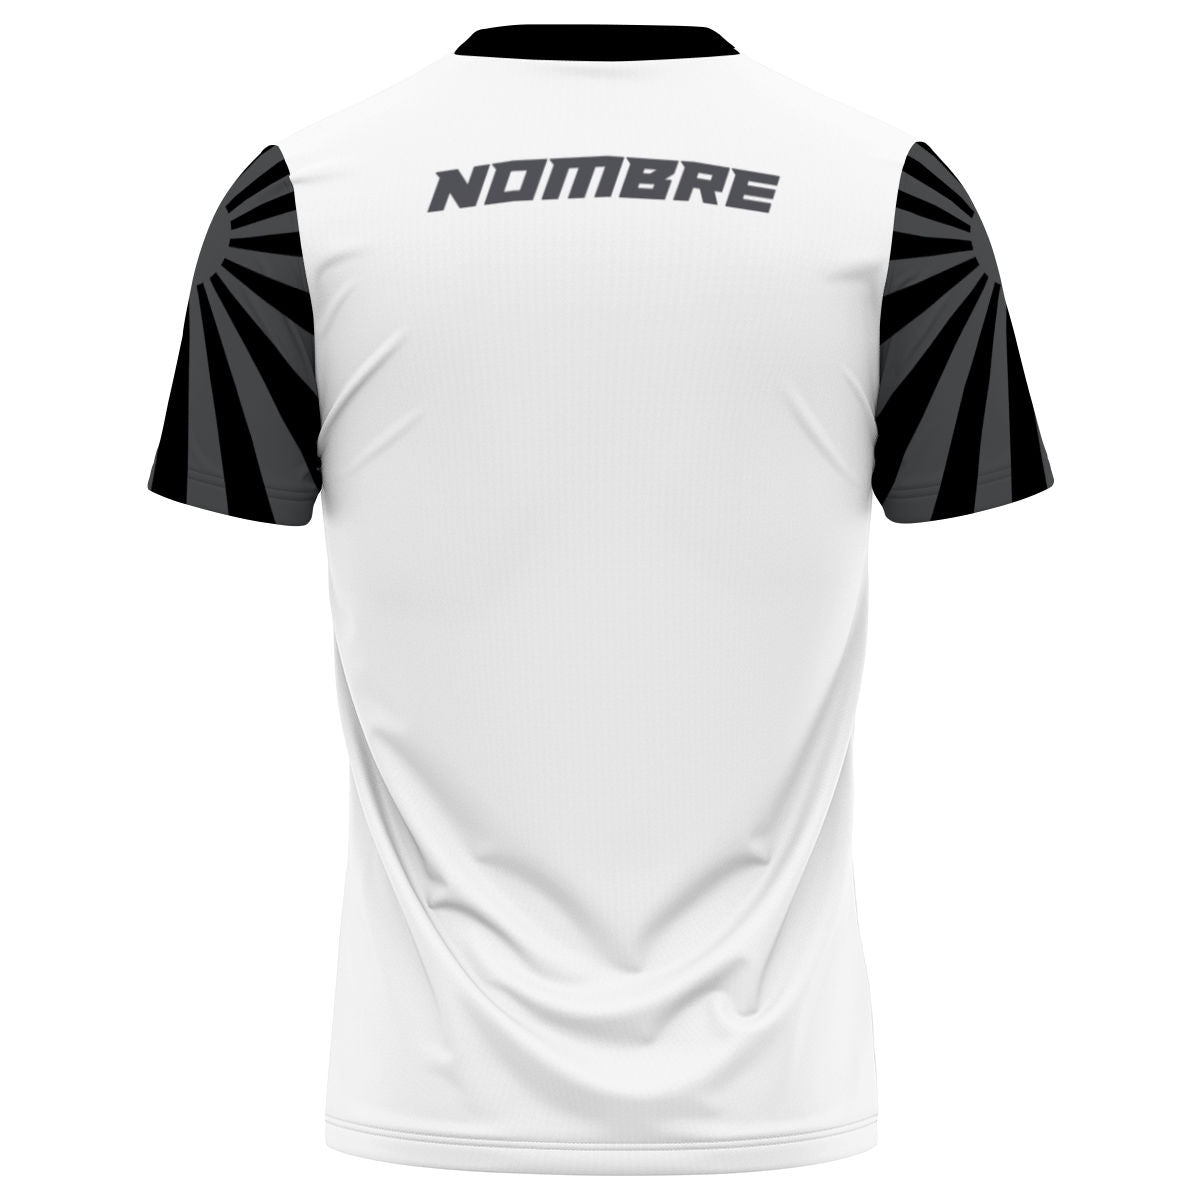 NVCL 2020 - Pedido - Men's Performance Shirt